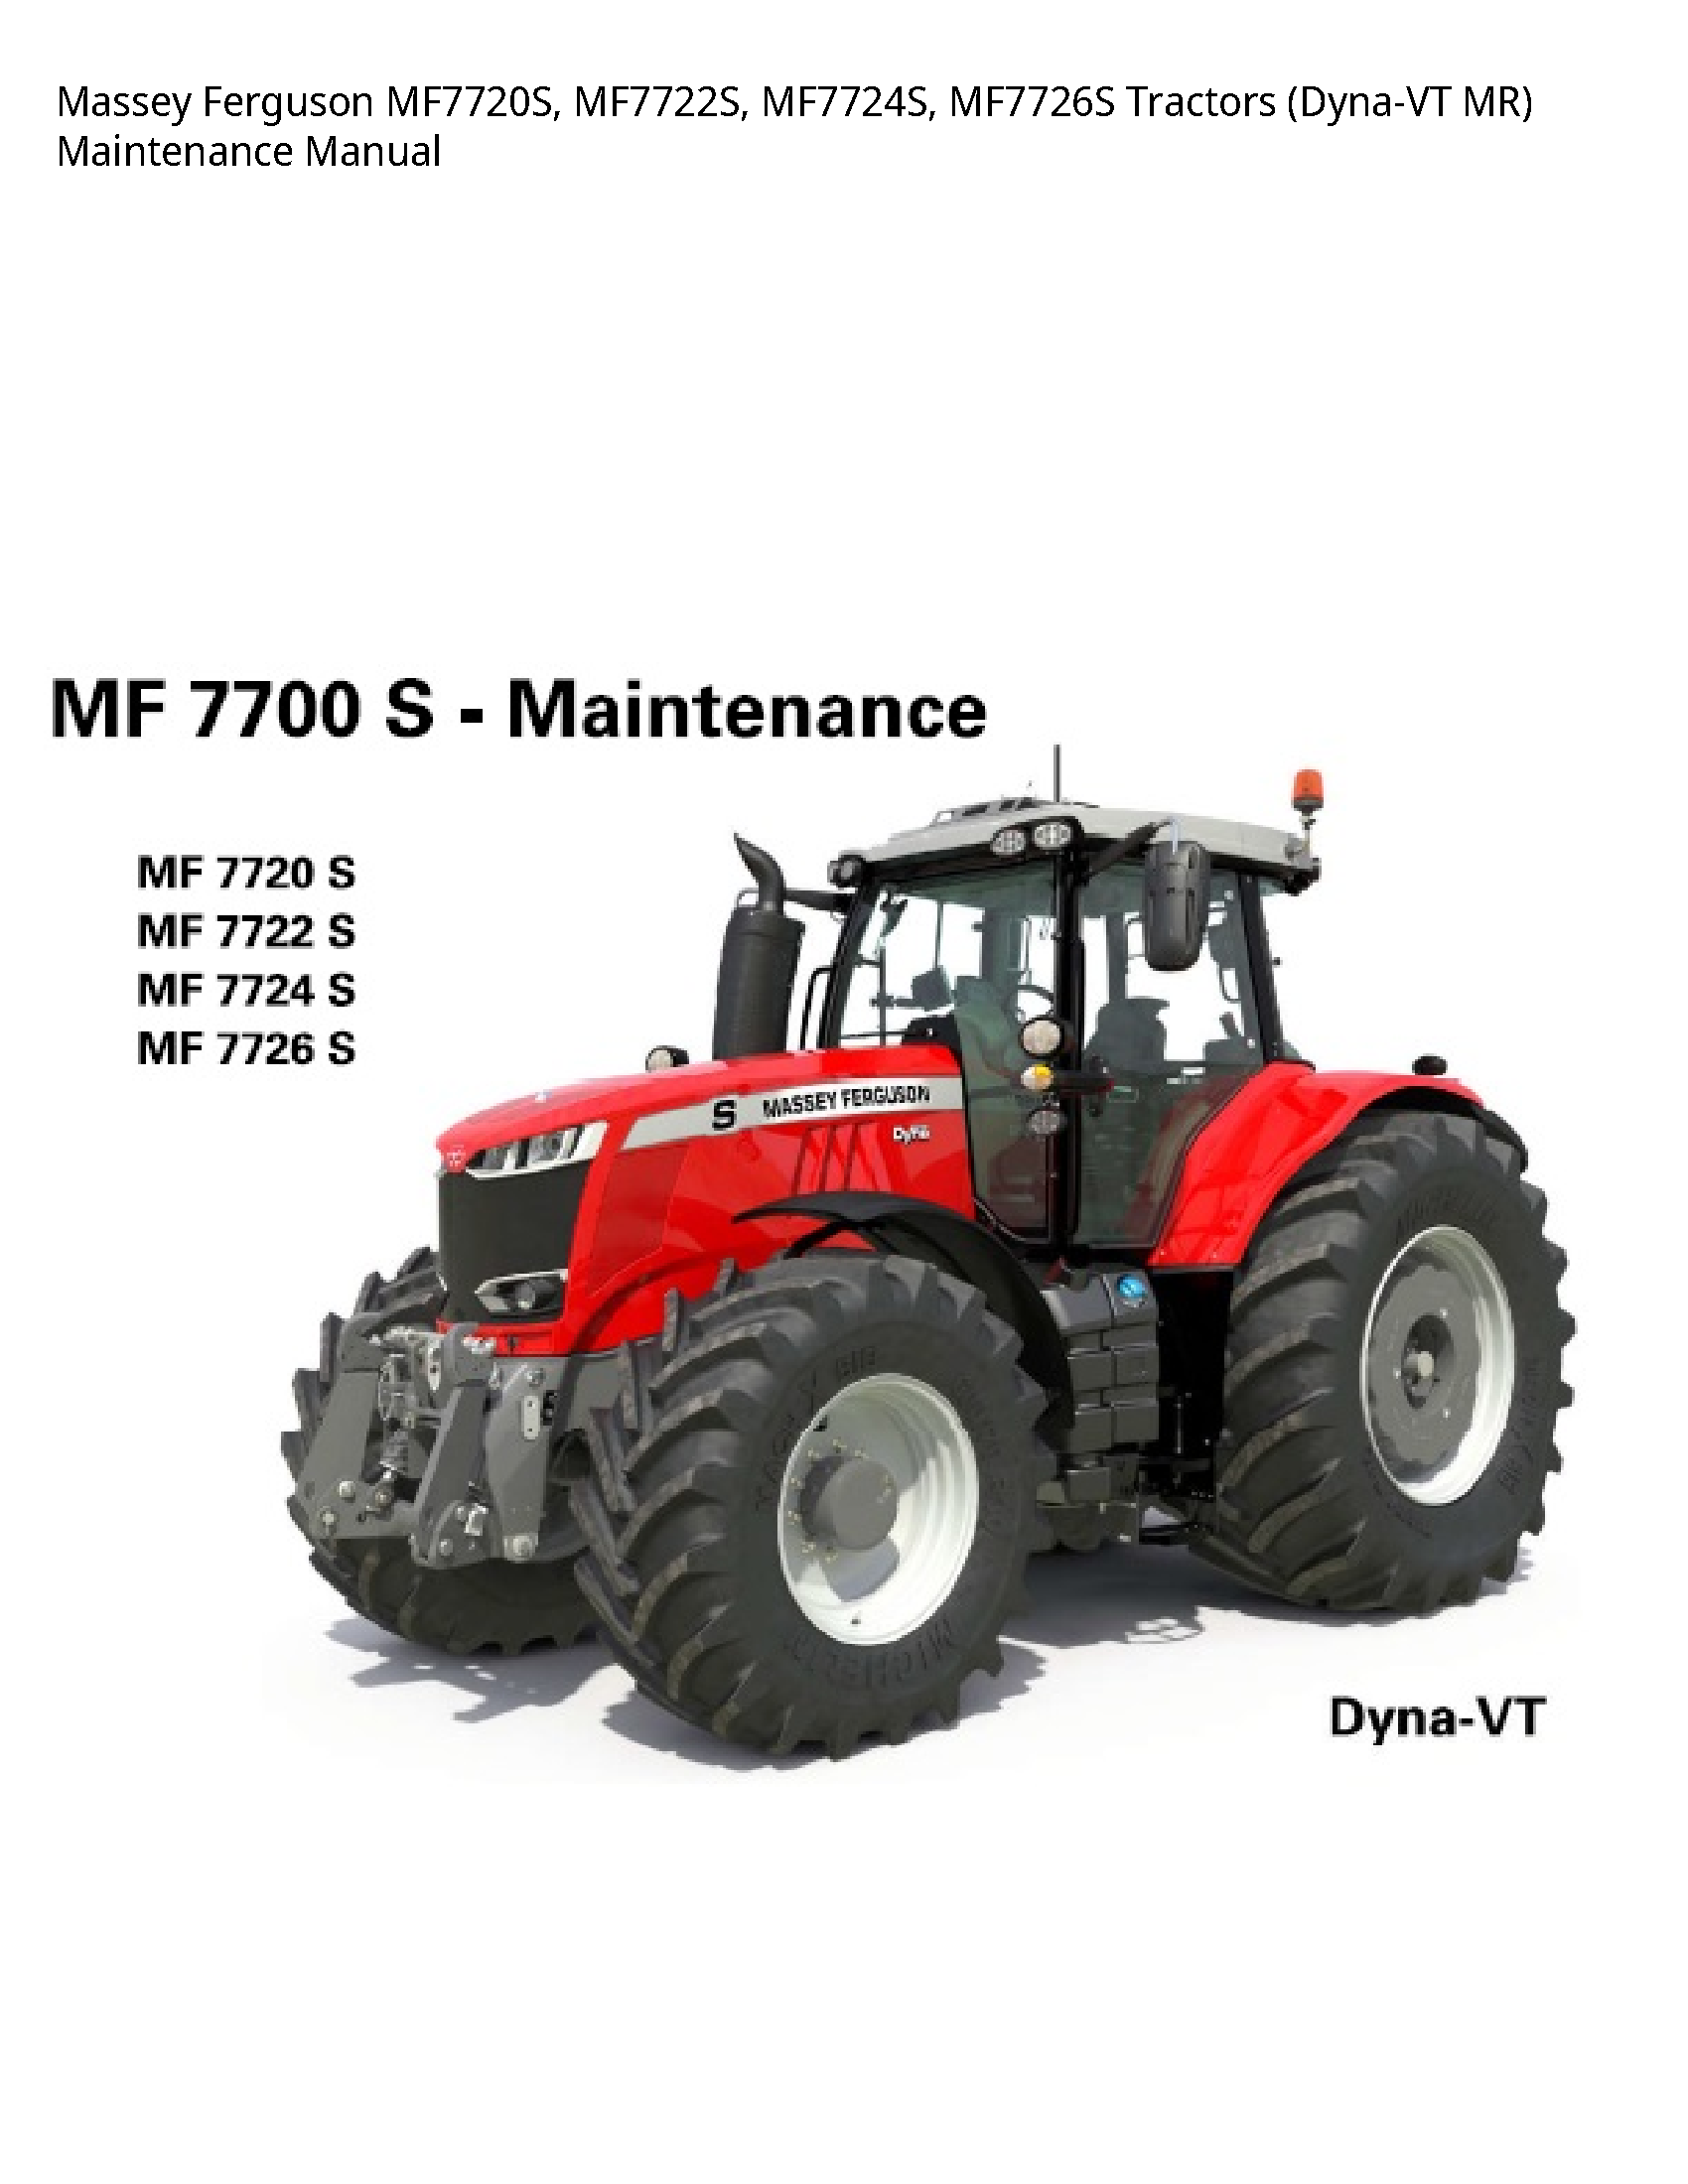 Massey Ferguson MF7720S Tractors (Dyna-VT MR) Maintenance manual